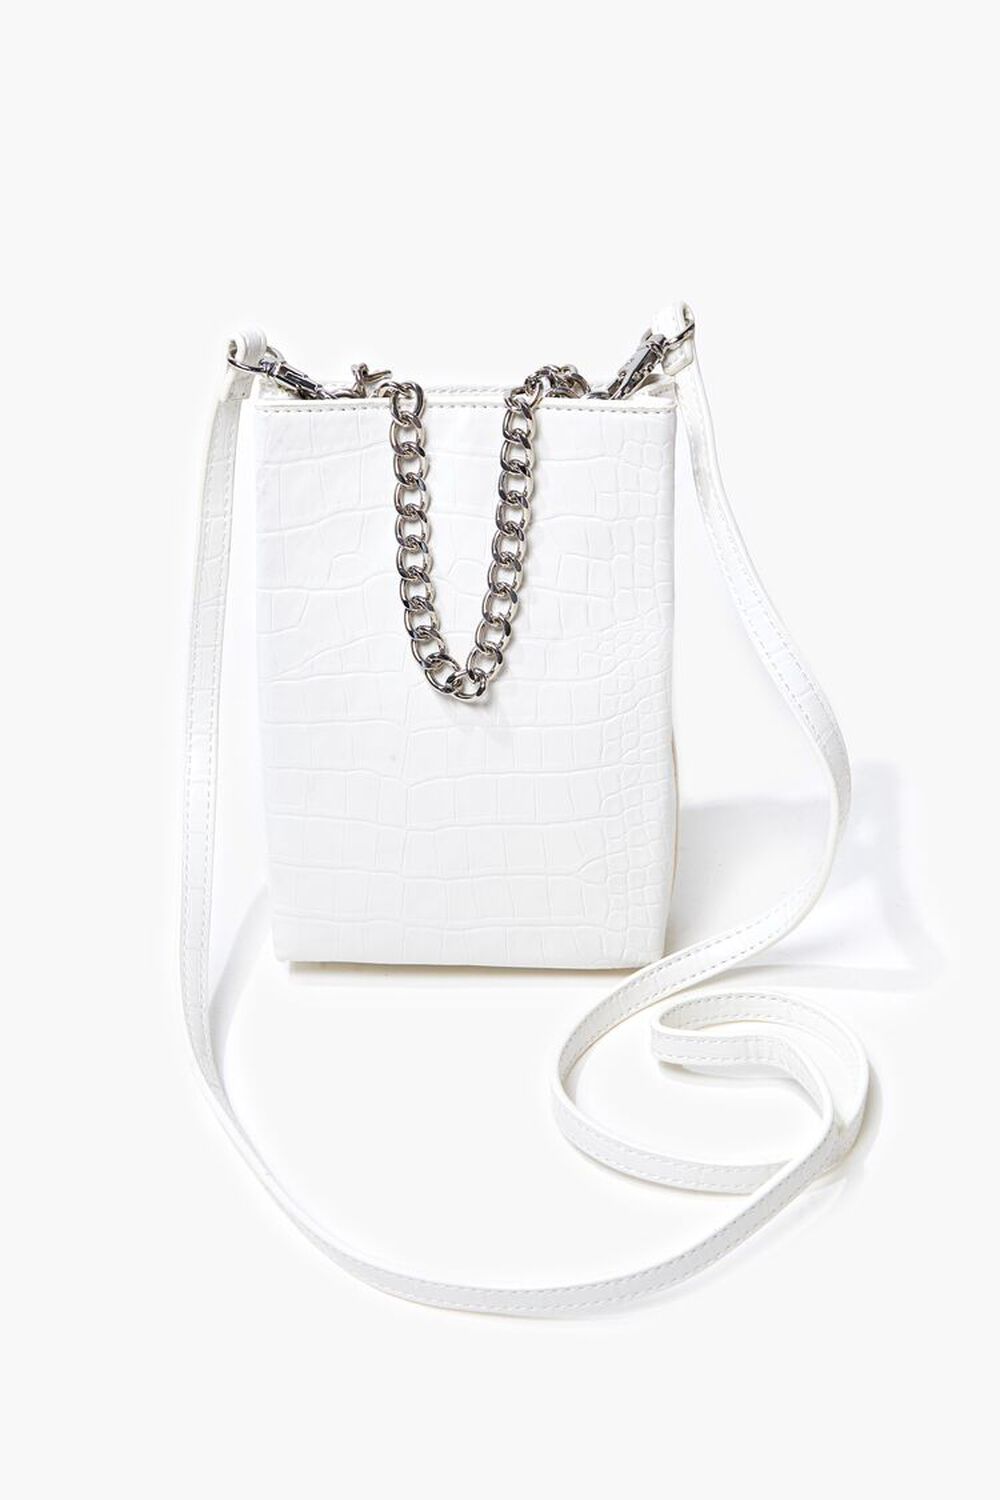 WHITE Faux Croc Leather Crossbody Bag, image 1